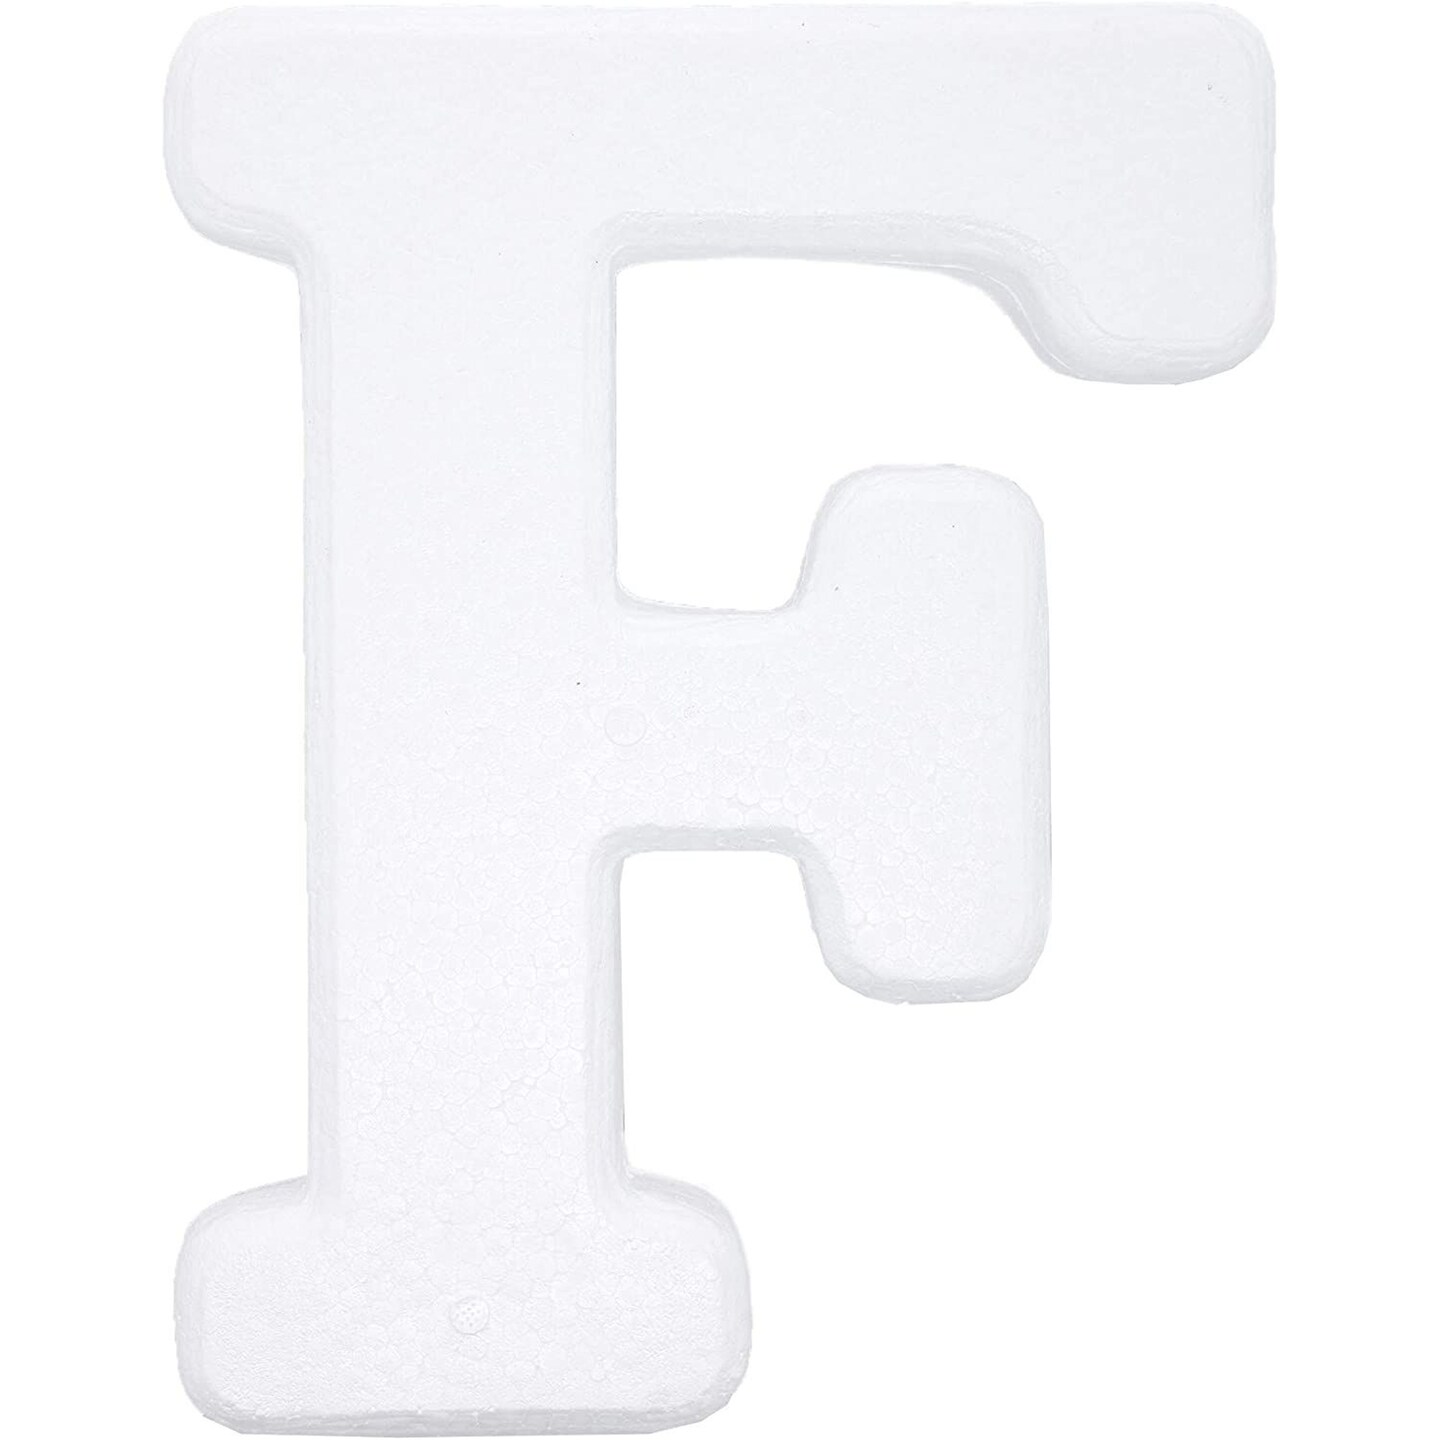 Foam Letters, Craft Letters